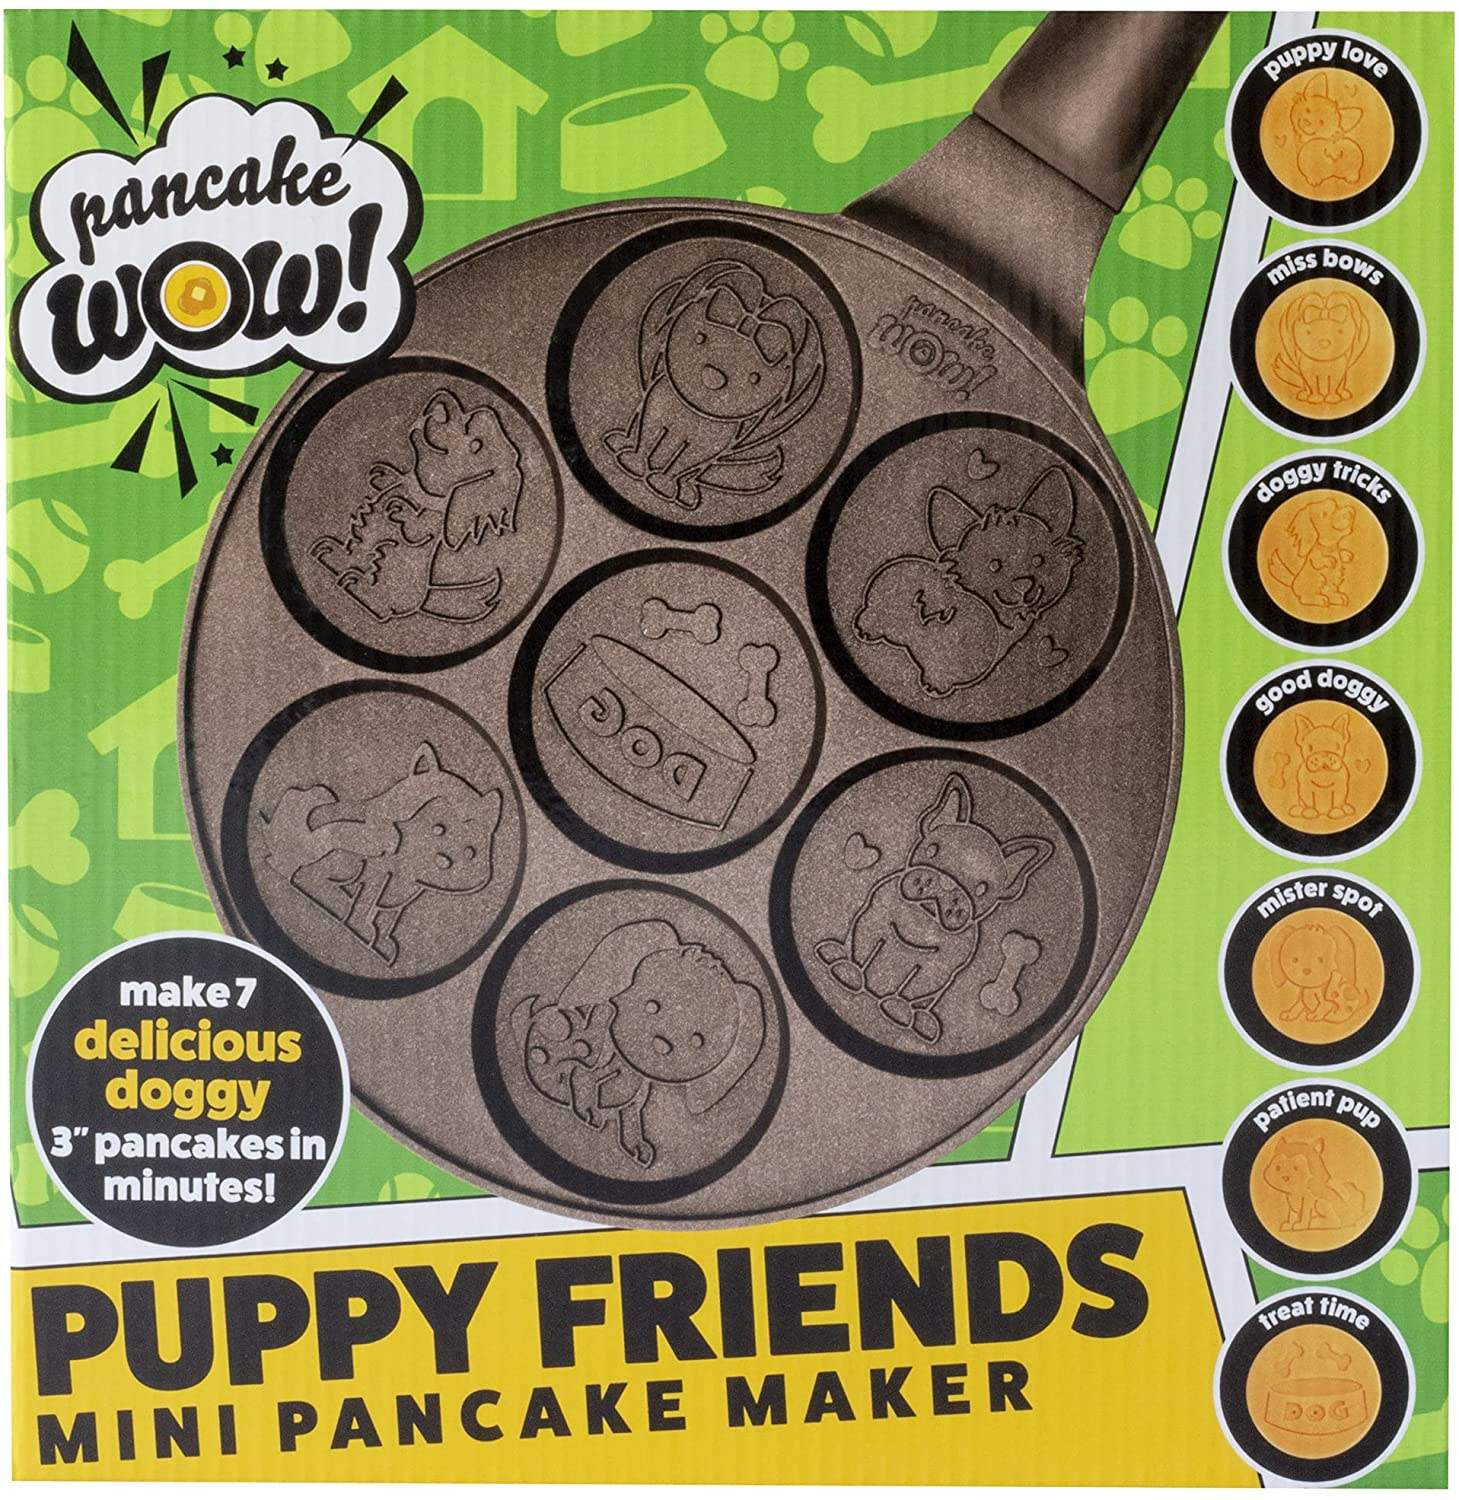 Puppy Friends-Waffle Wow!-